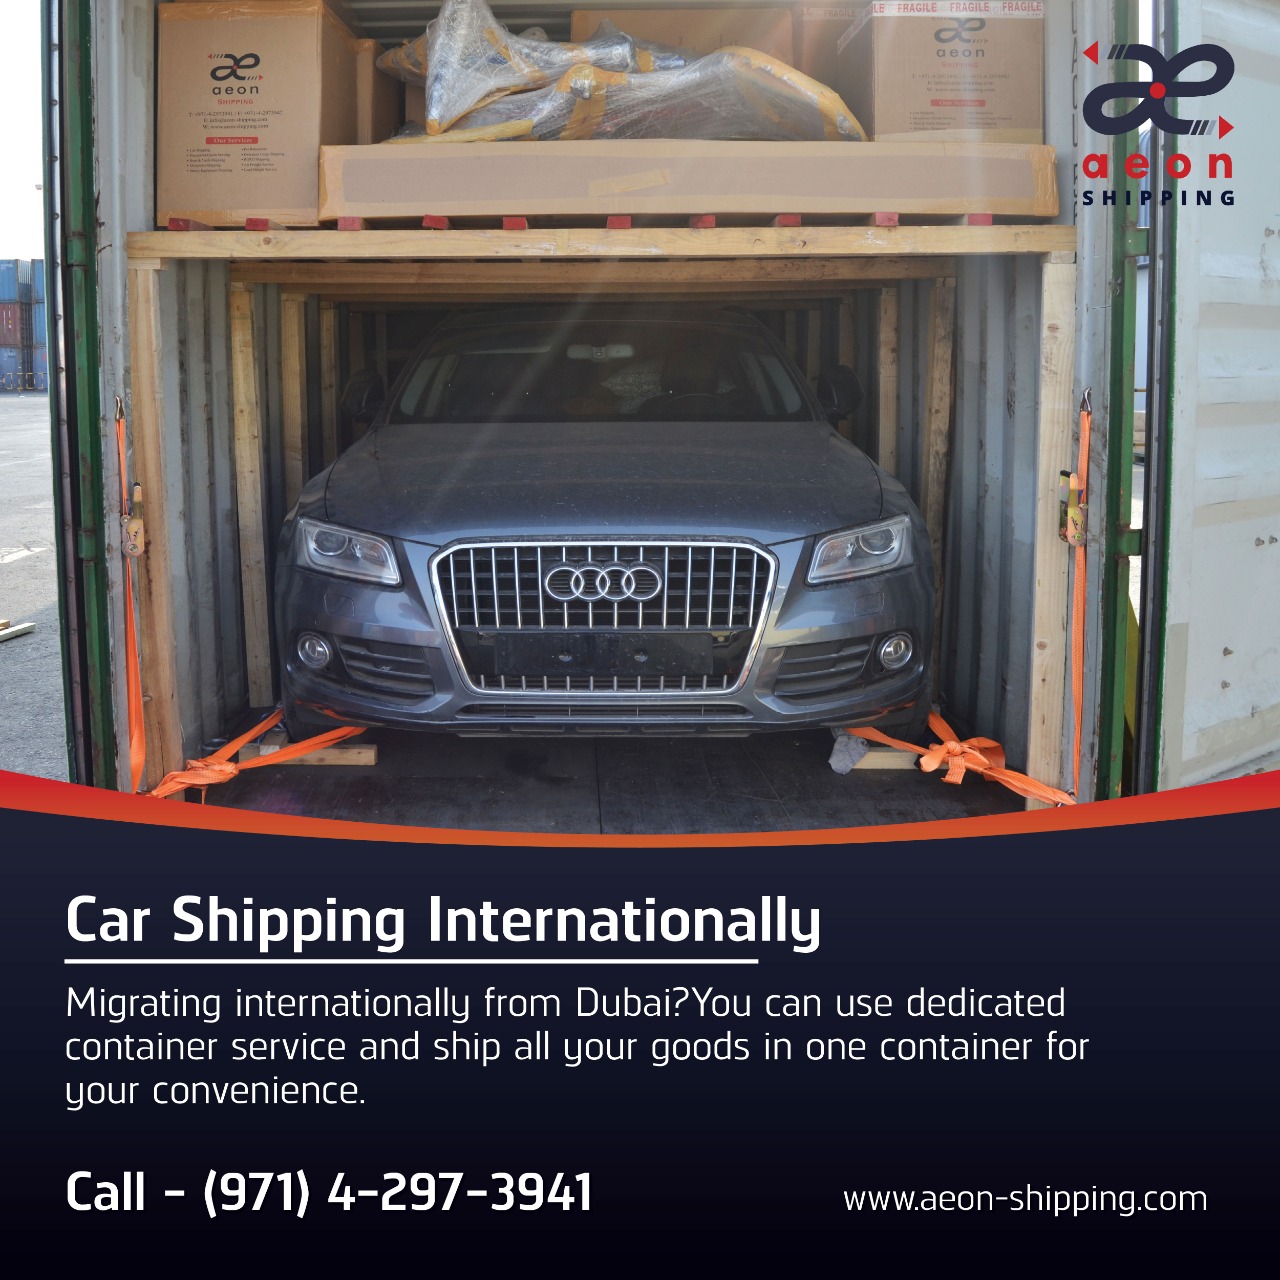 car shipping Internationally from UAE